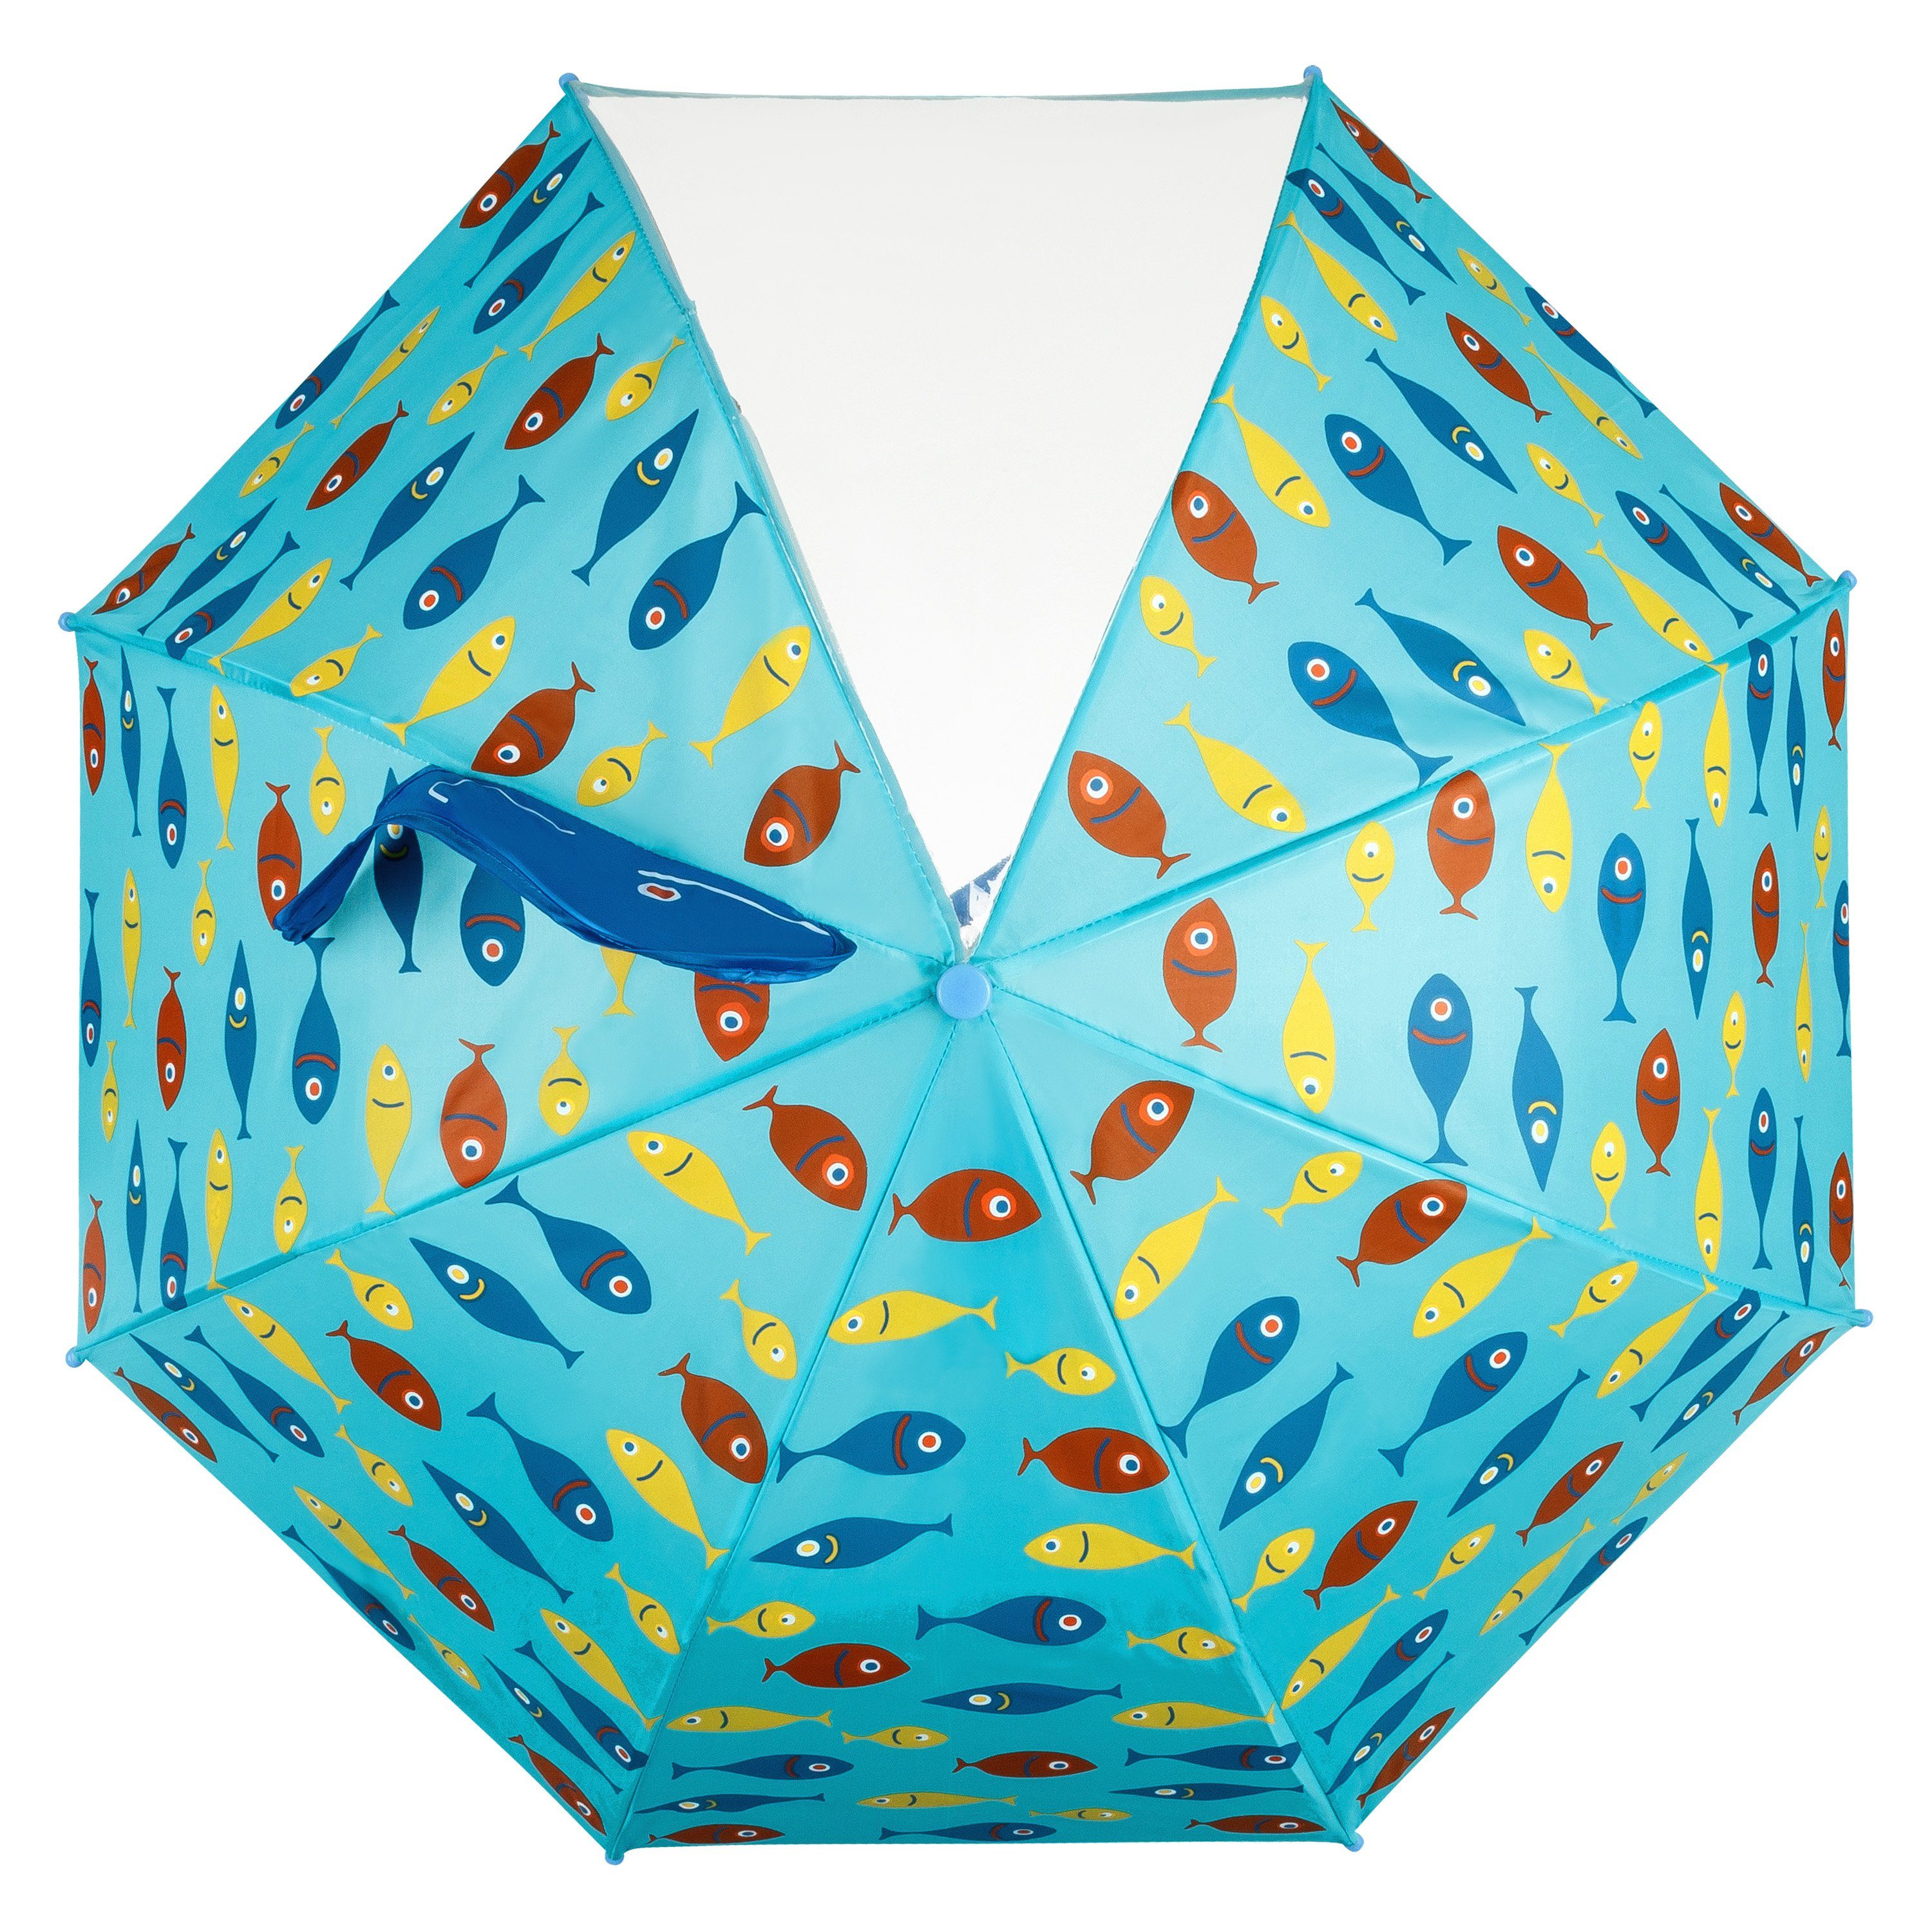 Spielzeug Kinder-Regenschirme von Lilienfeld Stockregenschirm VON LILIENFELD Regenschirm Kinderschirm Fische Meer Fischschwarm K